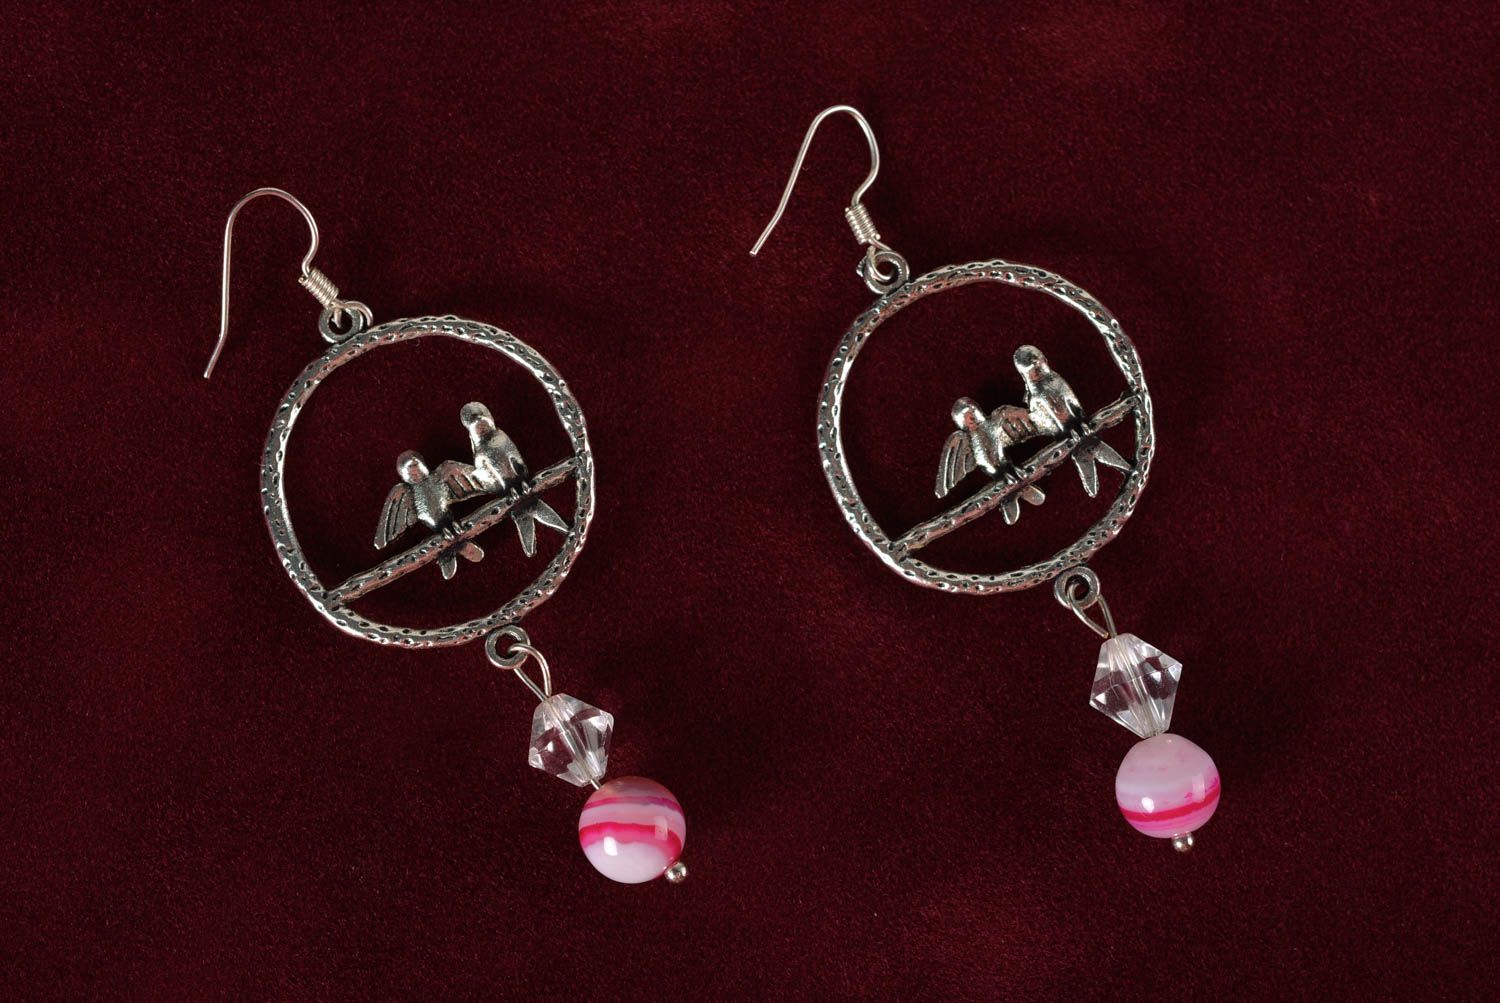 Handmade earrings stone jewelry metal jewelry fashion earrings gifts for girl photo 1